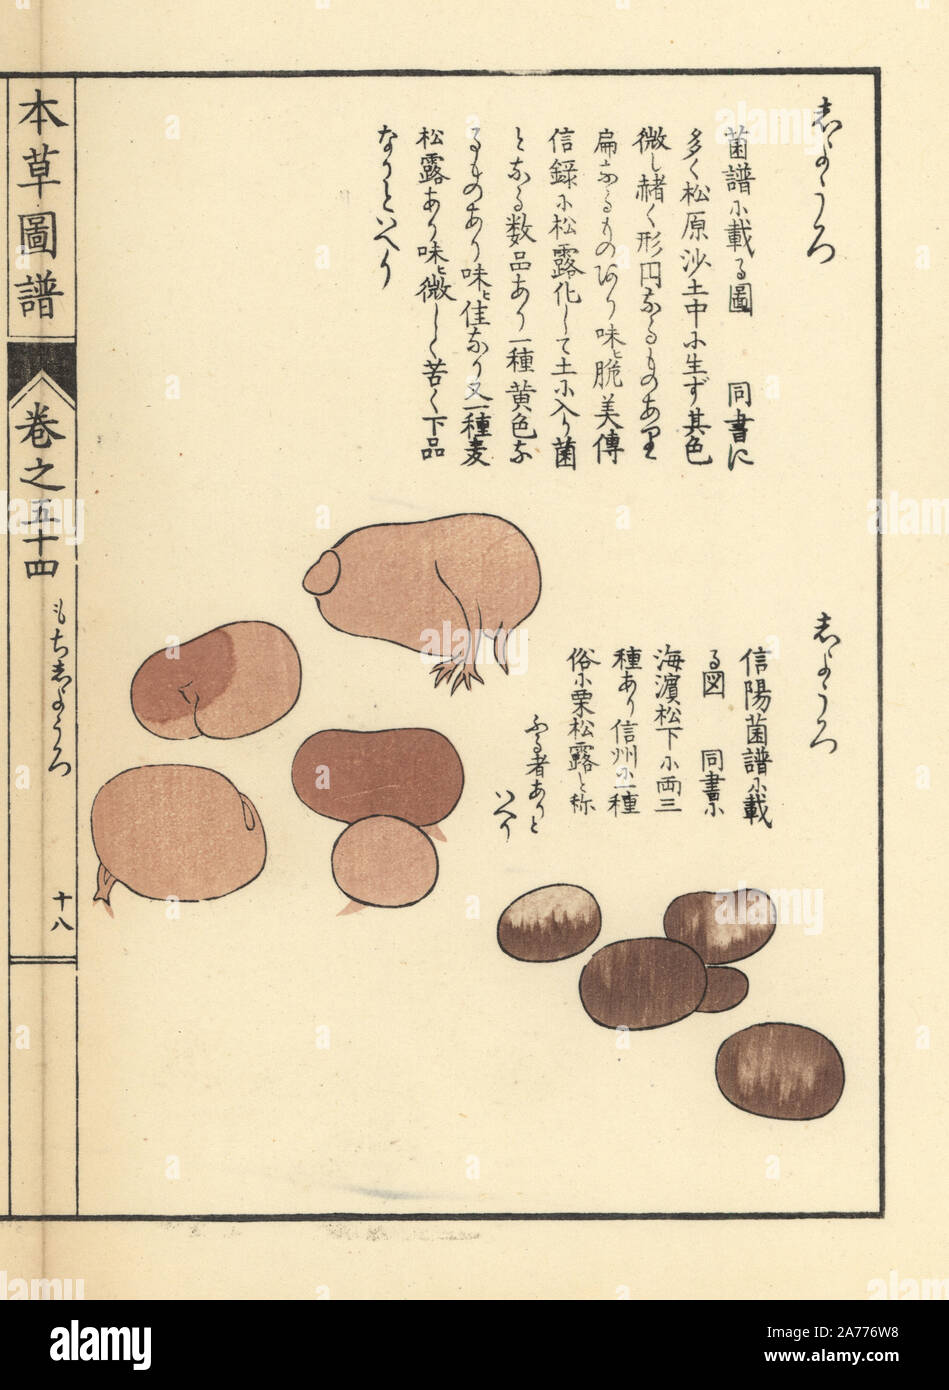 Shiyouro mushrooms, Rhizopogon rubescens. Handcoloured woodblock print from Iwasaki Kan'en's 'Honzo Zufu' (Illustrated Guide to Plants), Japan, 1916. Stock Photo